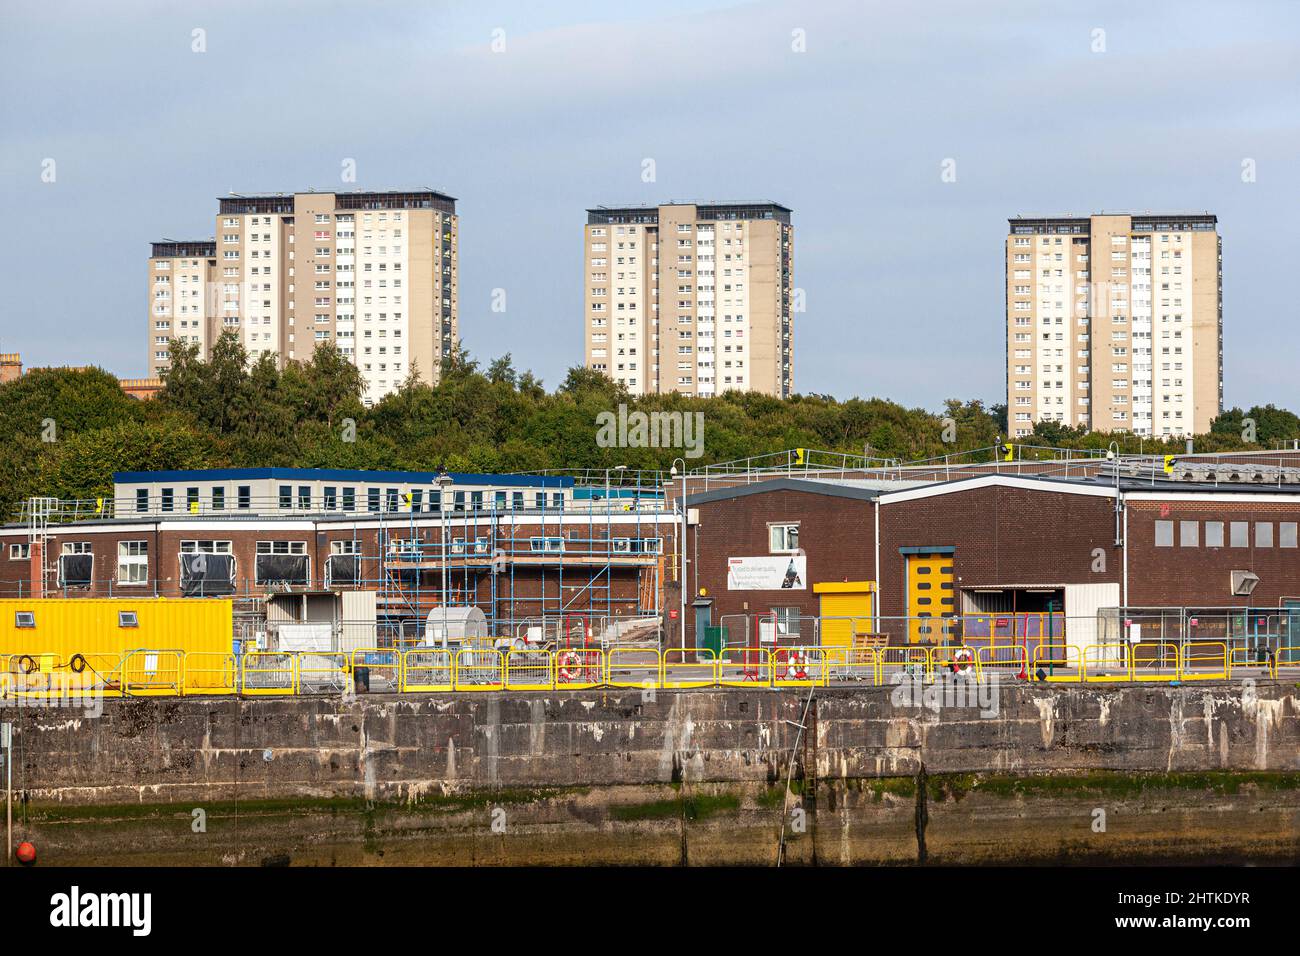 High rise apartment blocks at Knightswood, Glasgow, Scotland UK Stock Photo